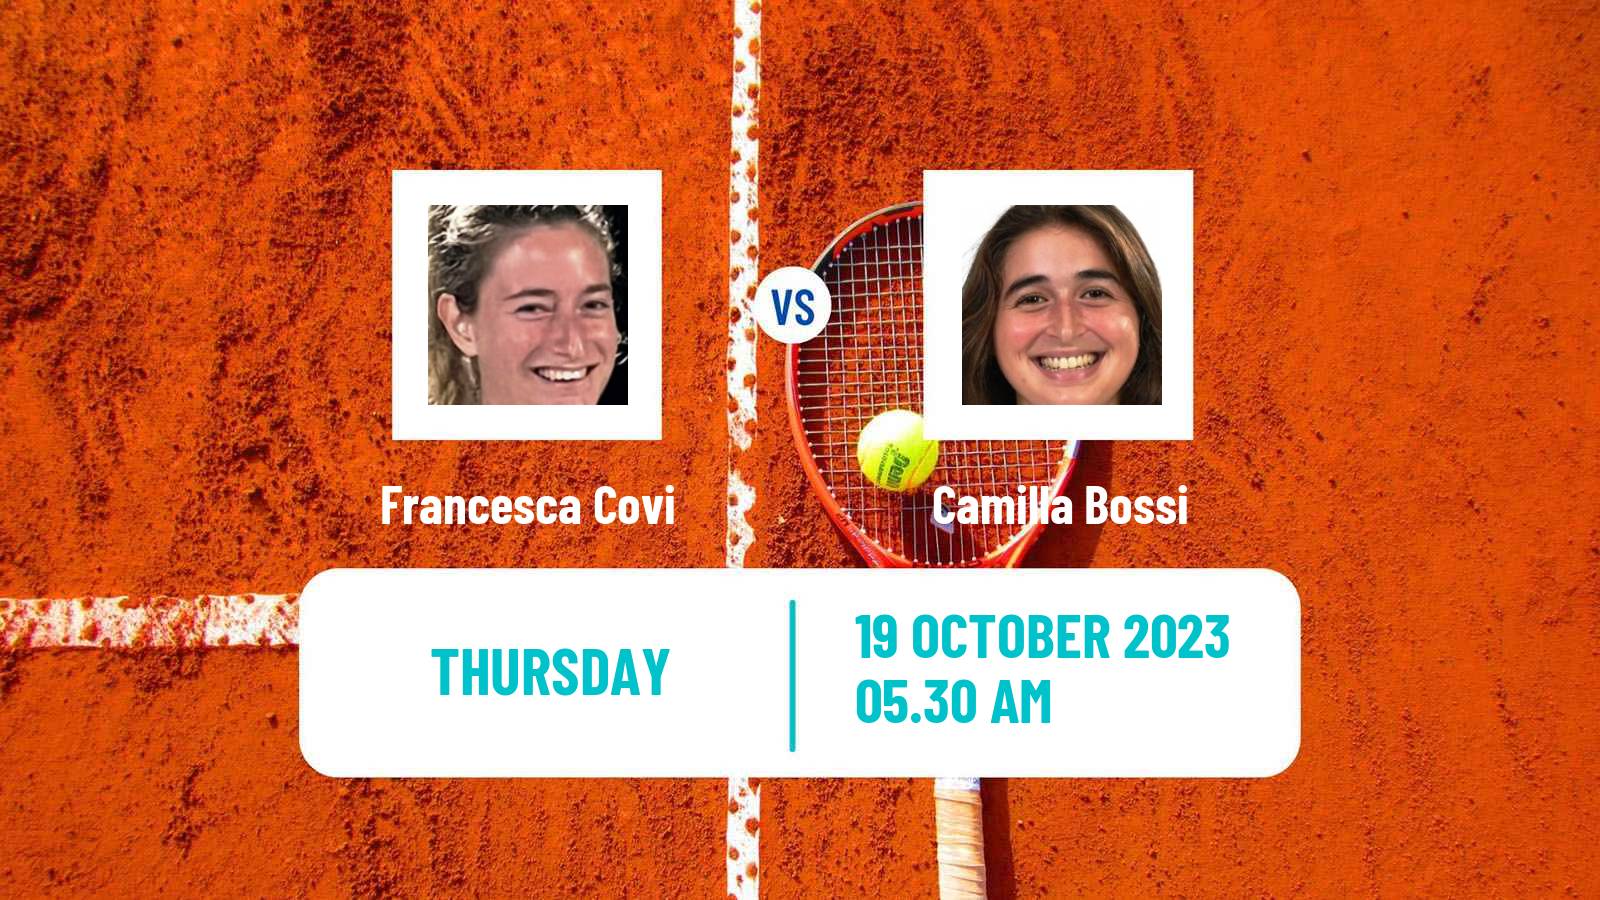 Tennis ITF W15 Monastir 37 Women Francesca Covi - Camilla Bossi